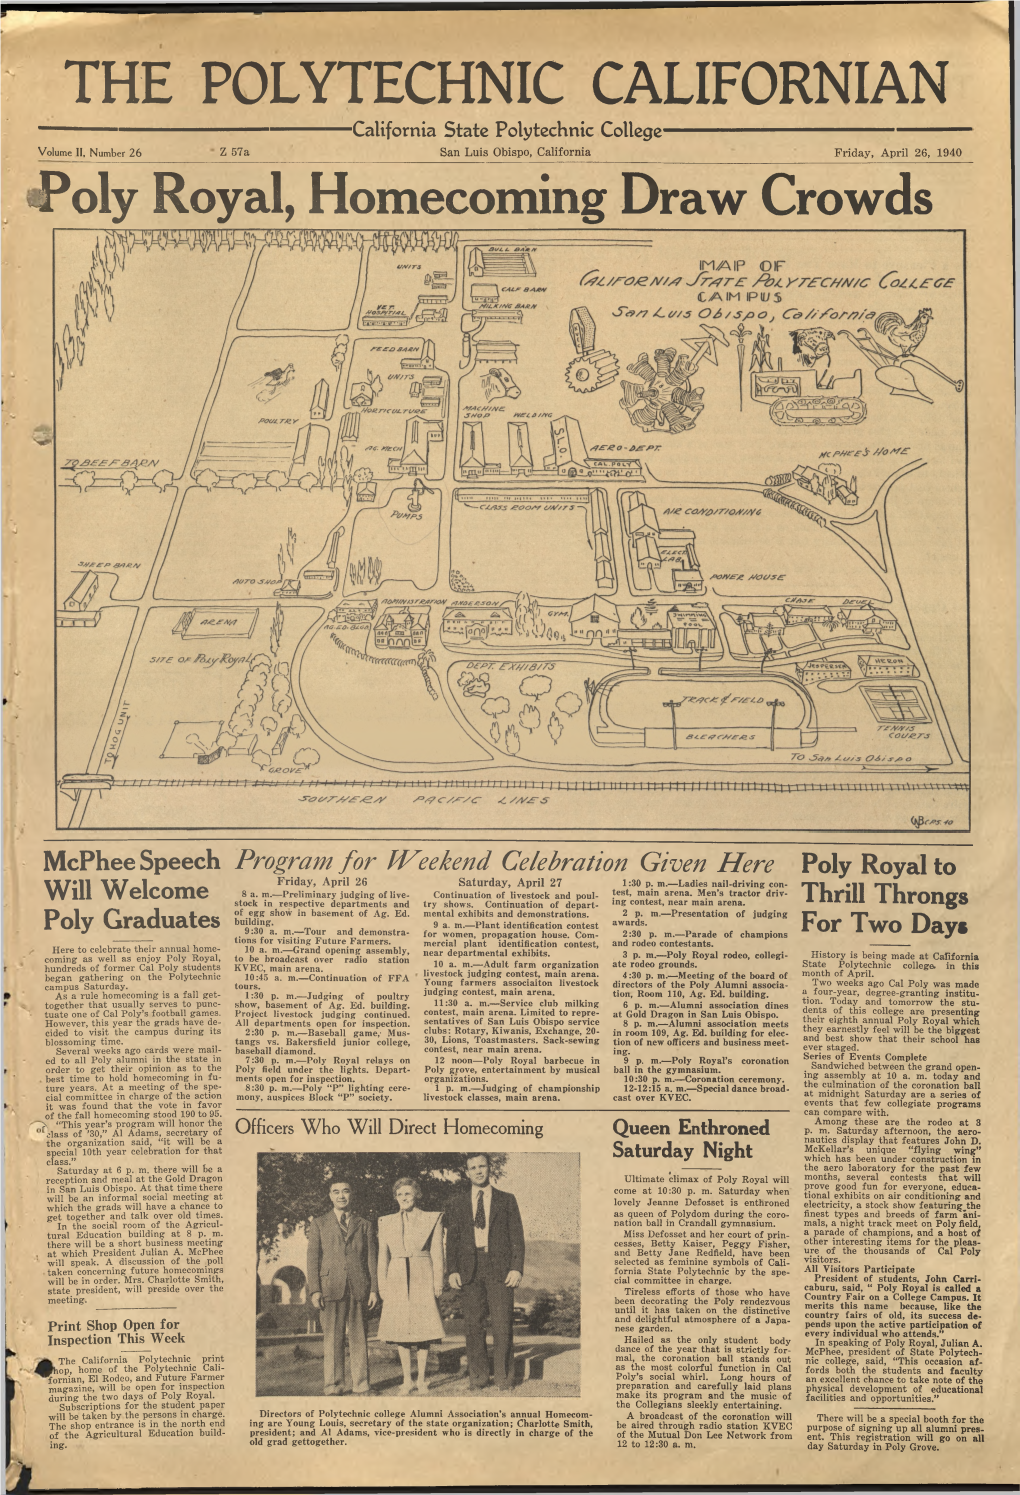 The Polytechnic Californian, April 26, 1940